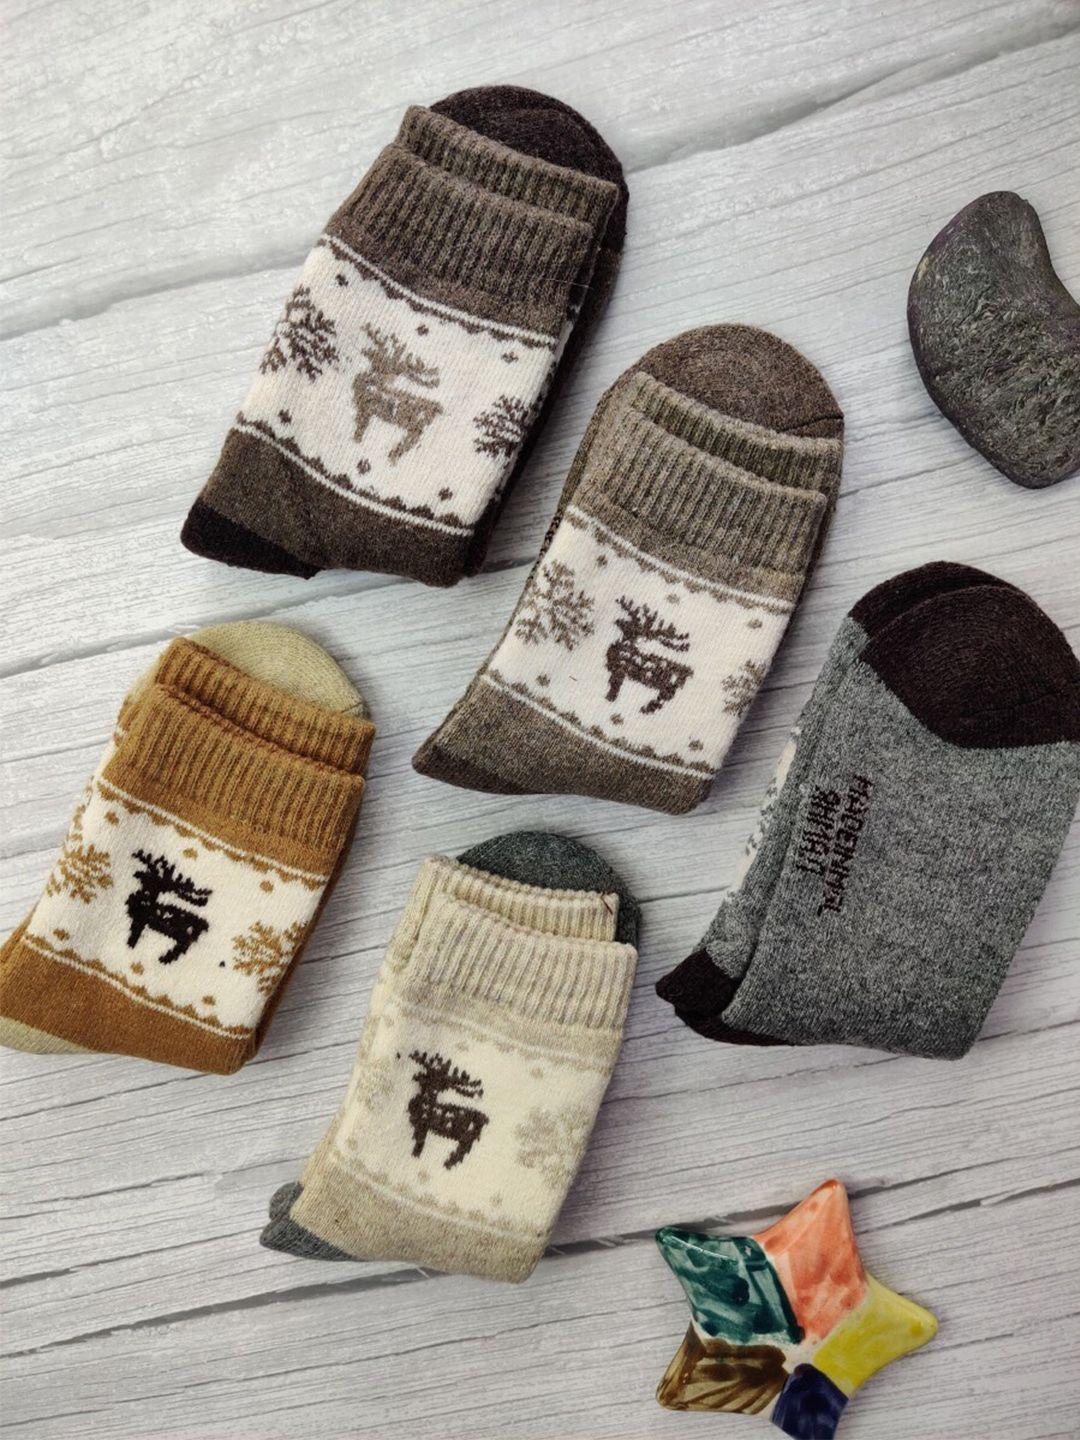 el regalo pack of 5 patterned calf-length socks